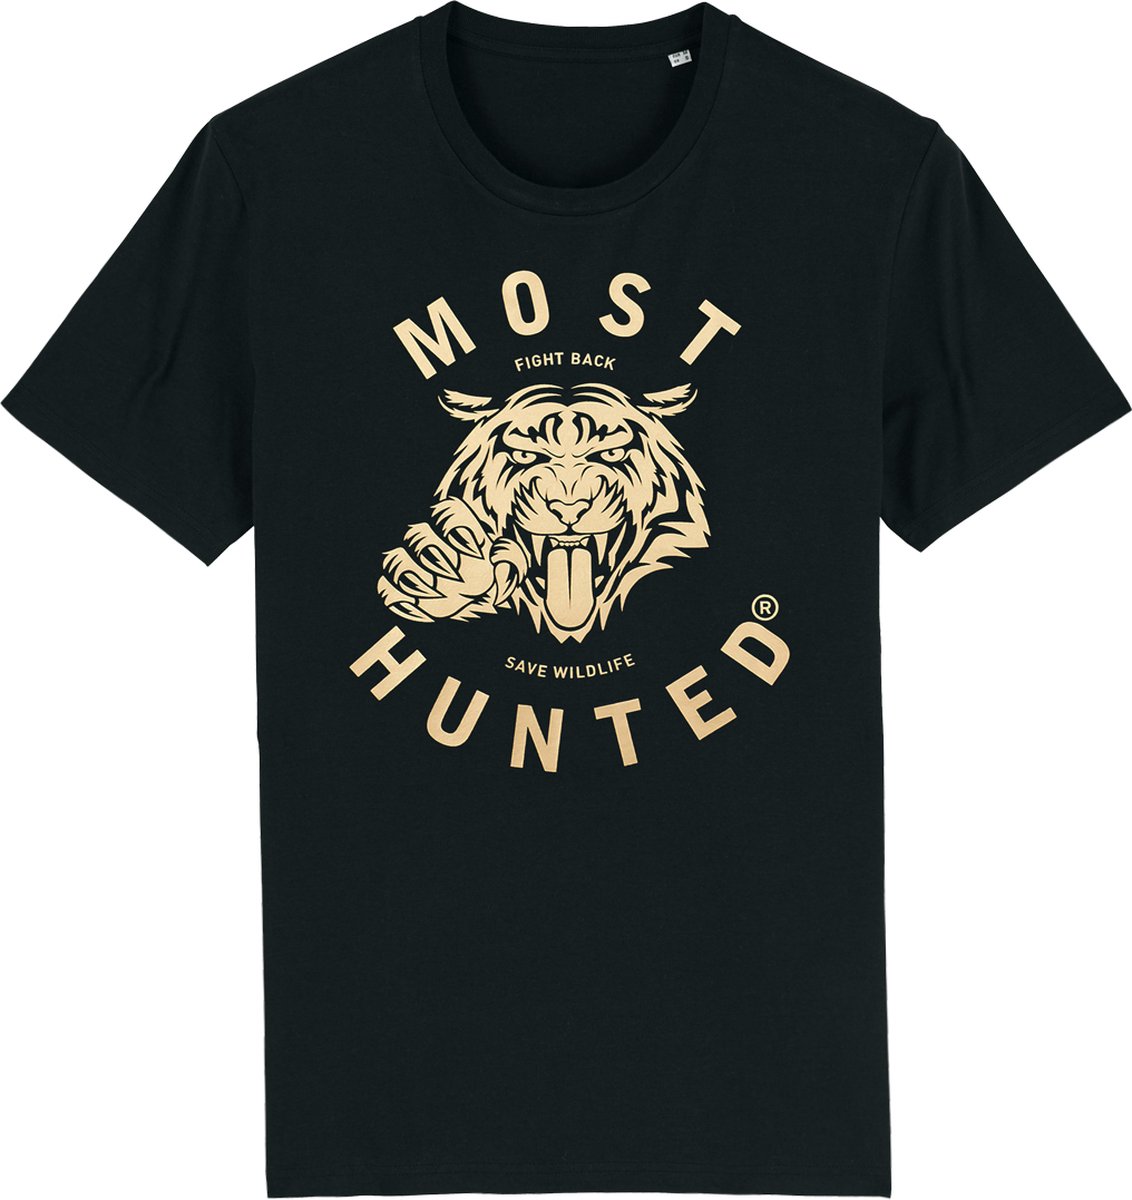 Most Hunted Tijger Claw - Unisex T-shirt - Zwart-Goud - Maat M